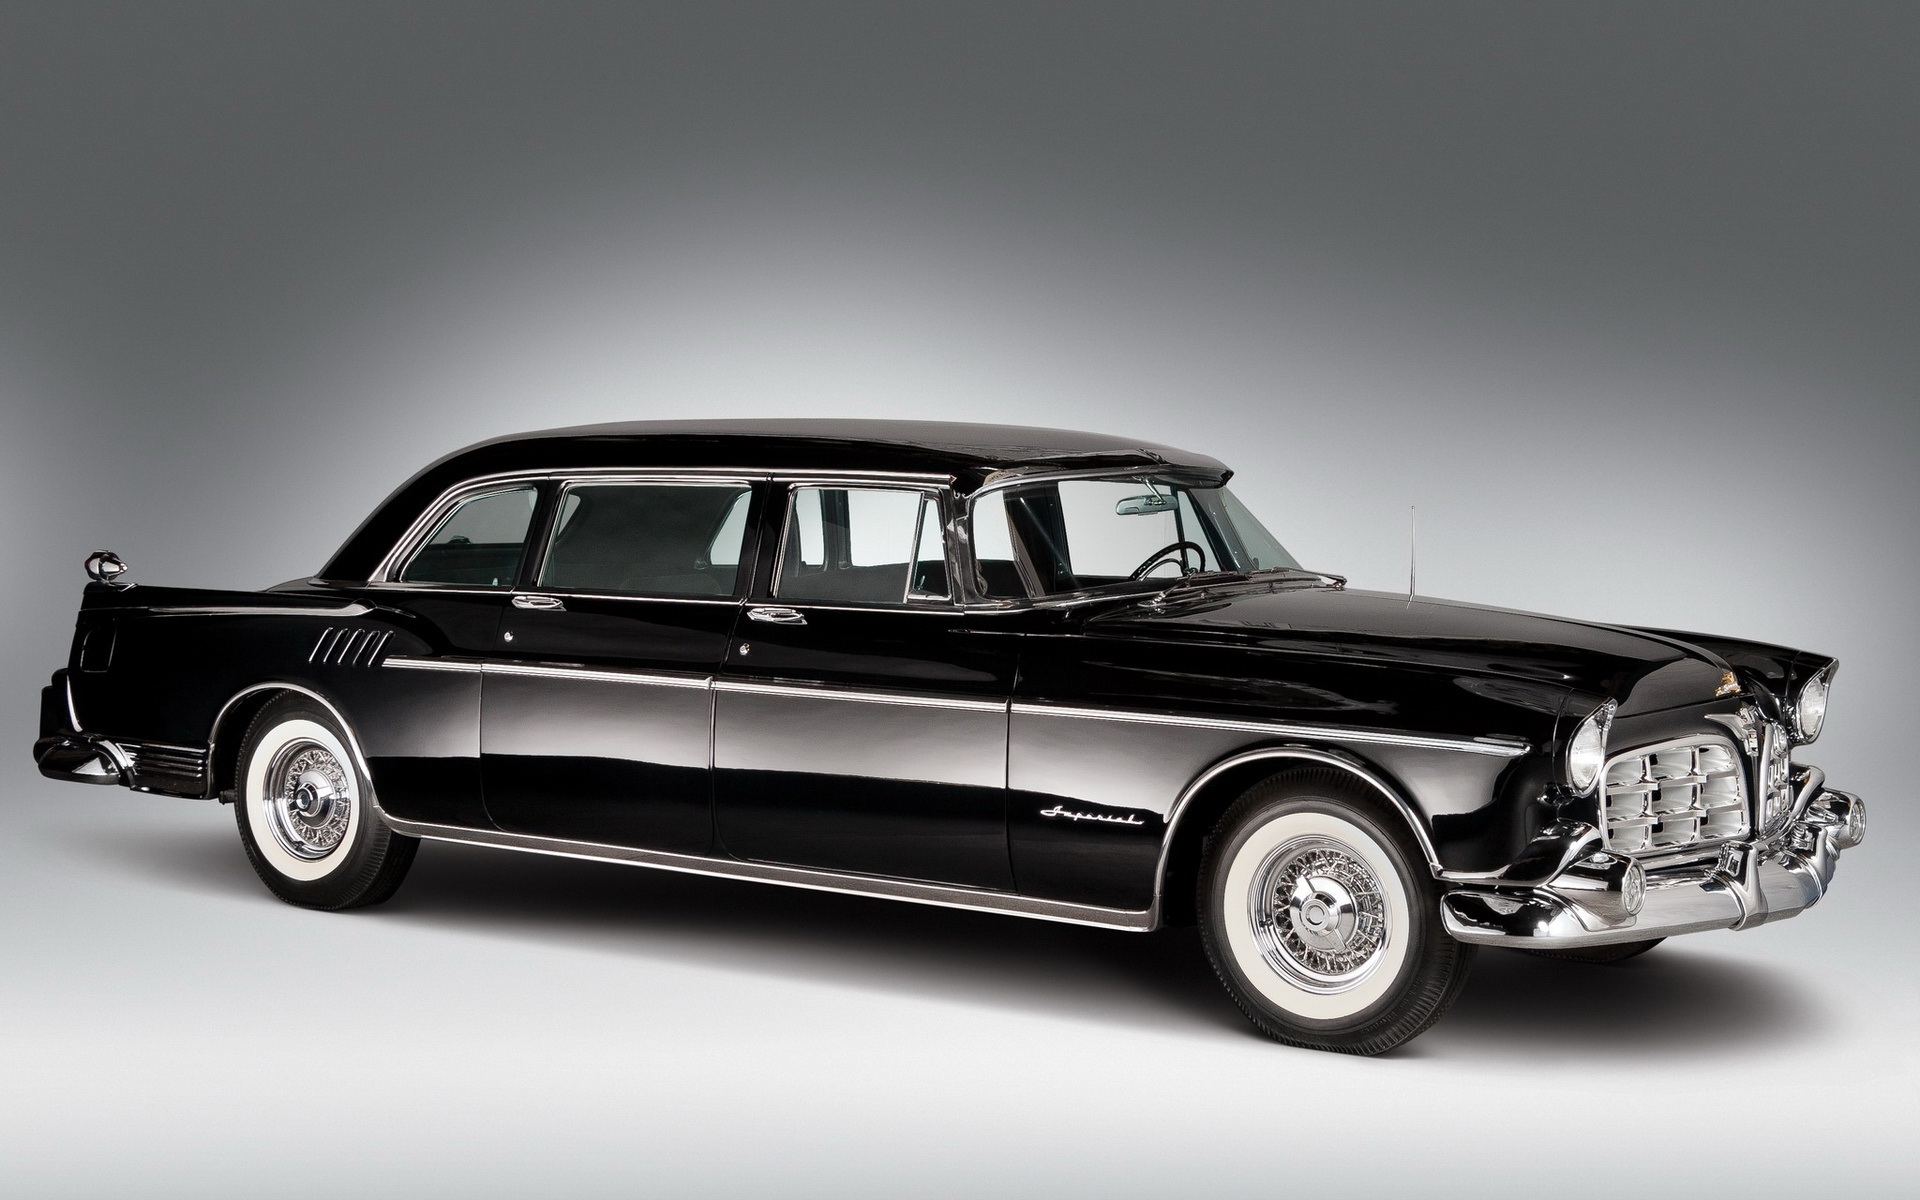 vehicles, 1956 chrysler crown imperial limousine, chrysler